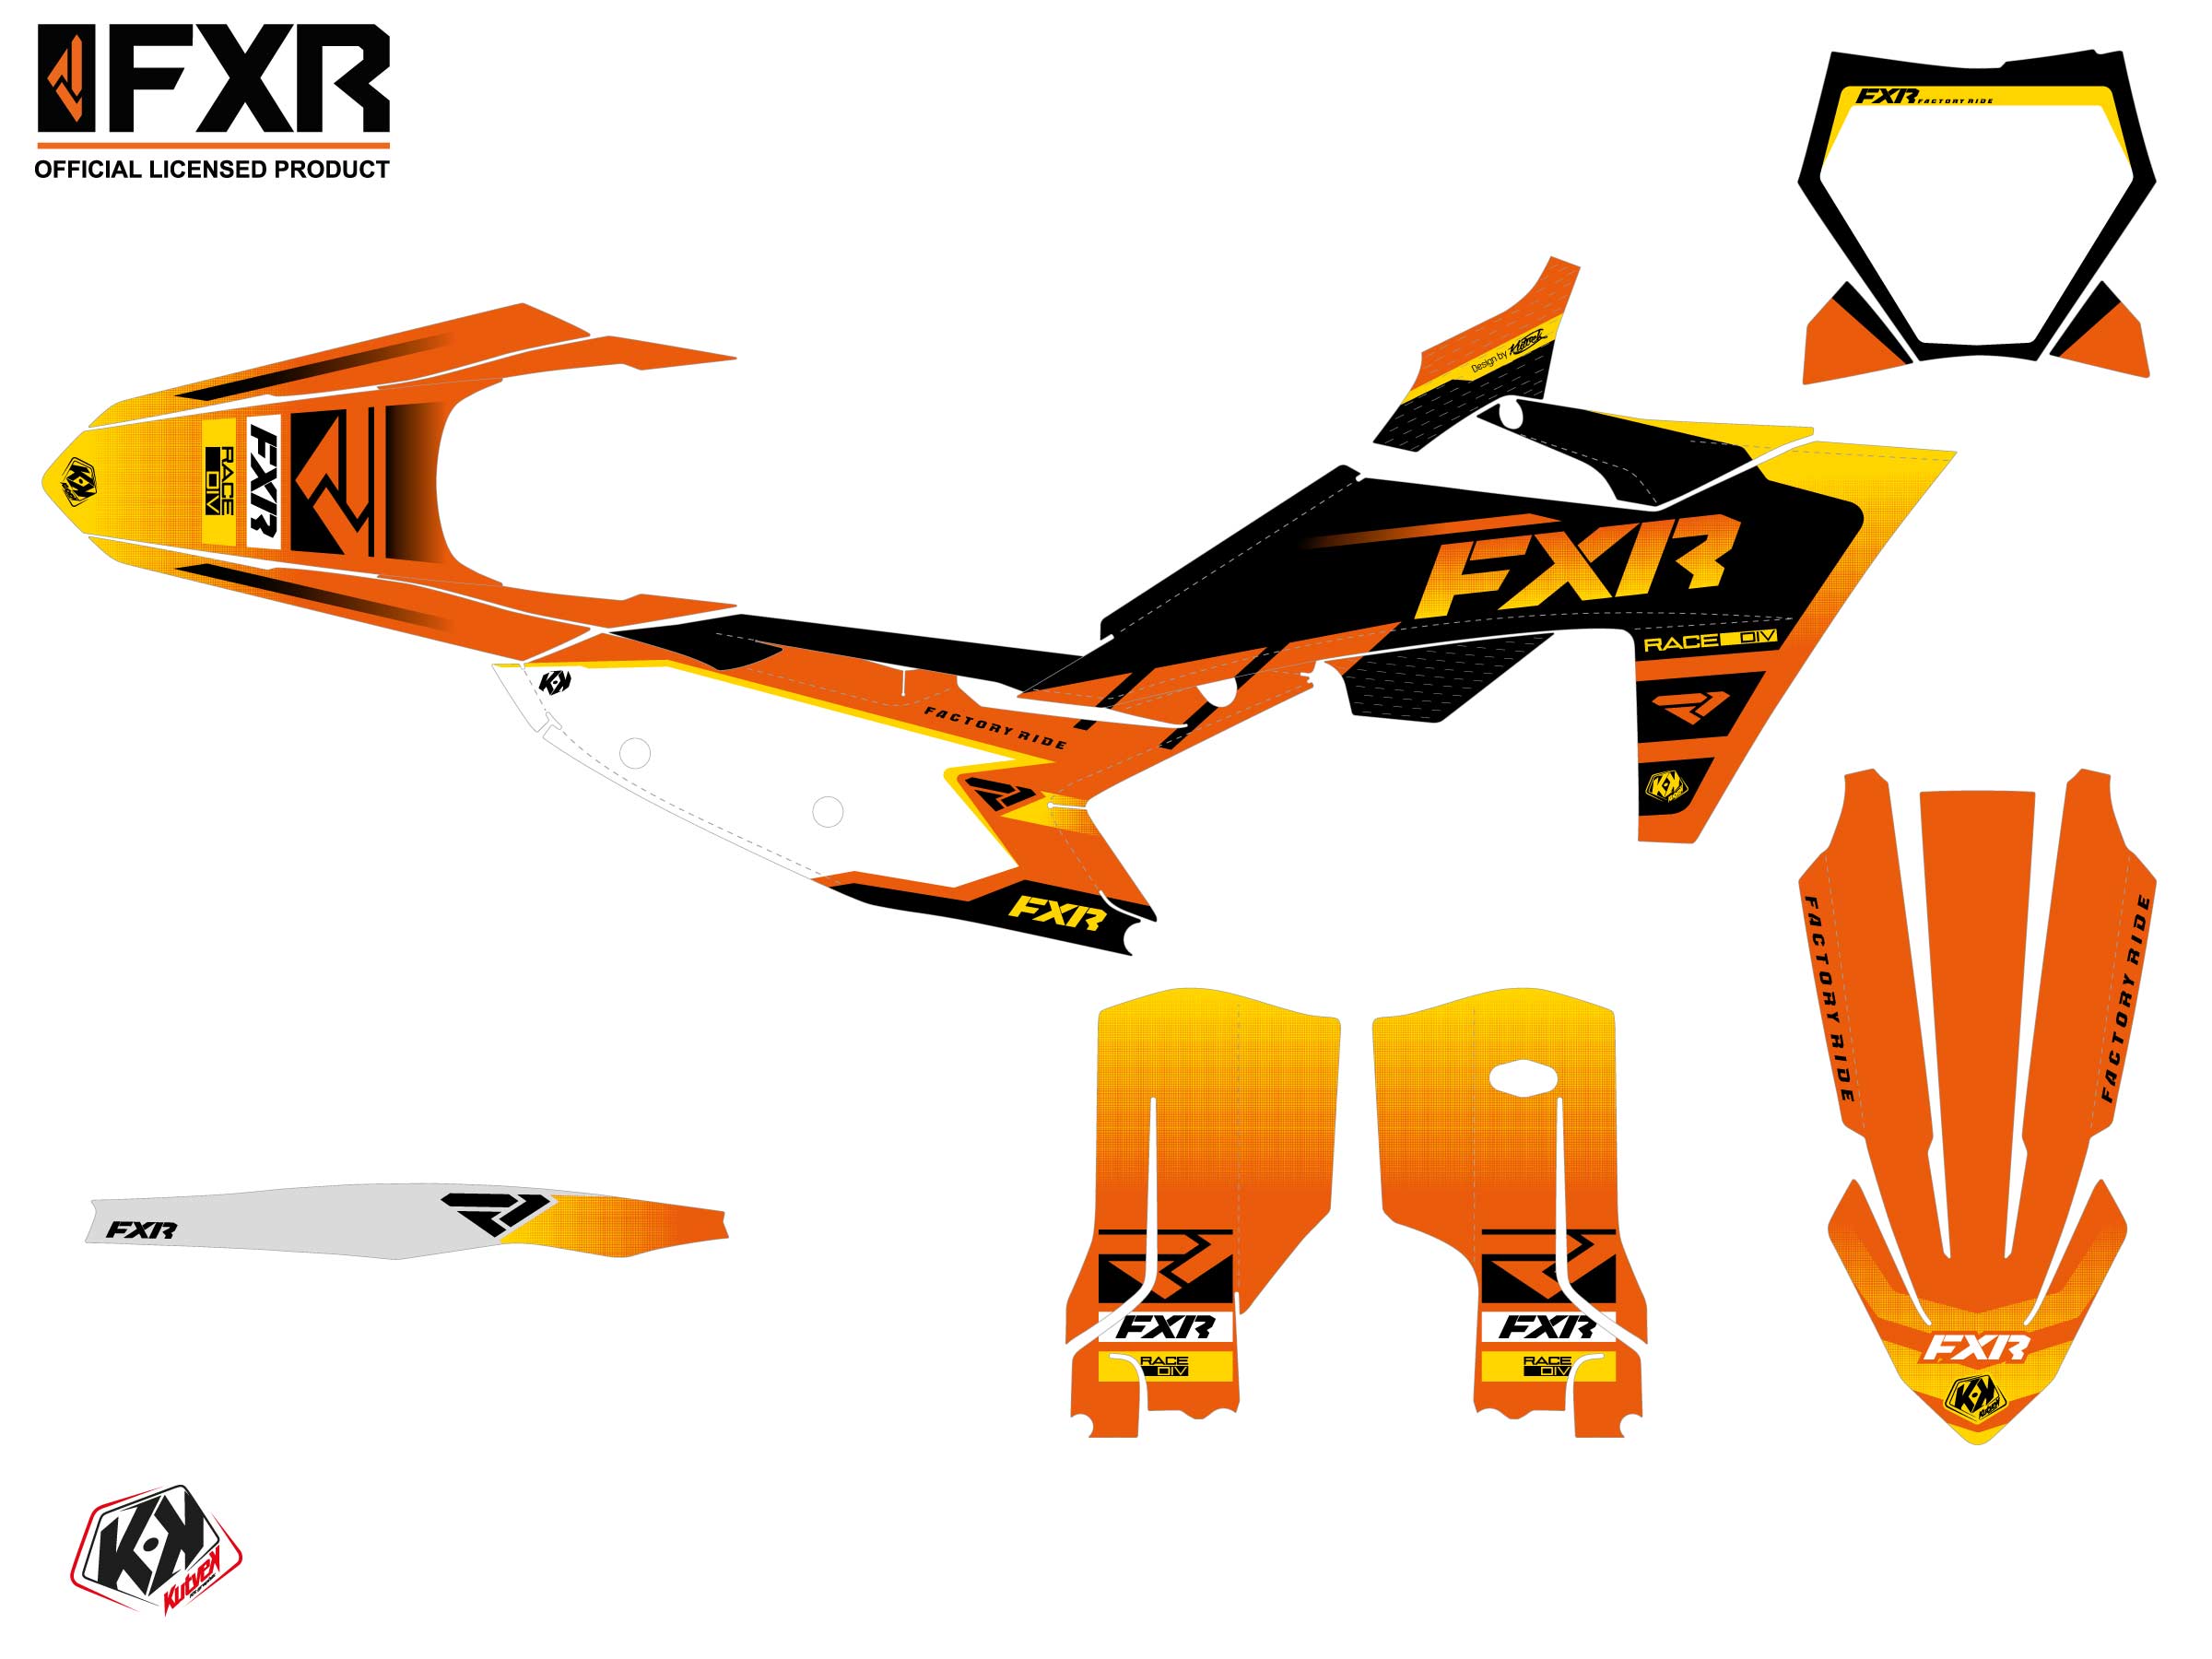 Ktm Sx 150 Dirt Bike Fxr Revo Graphic Kit Orange